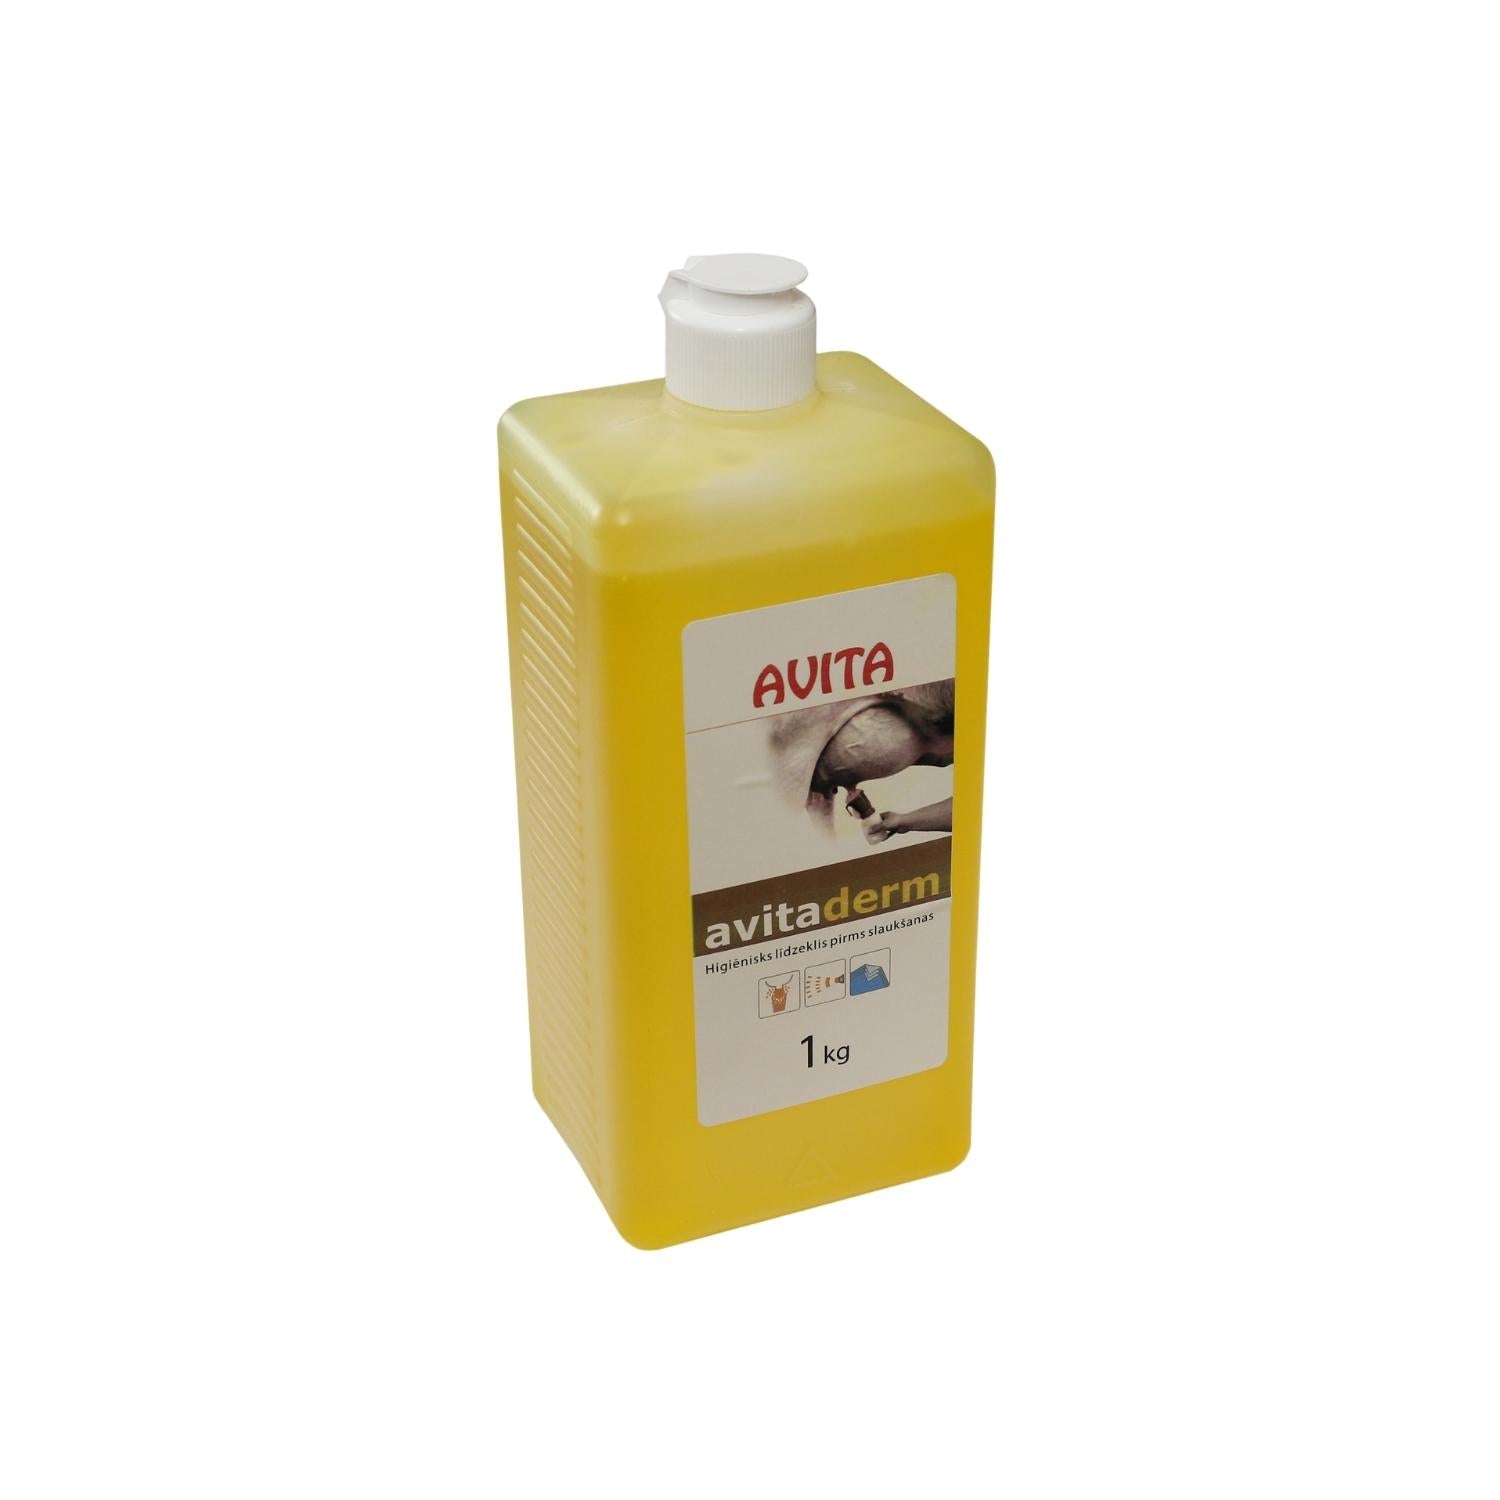 Avita Foam concentrate, hygienic product 1 kg